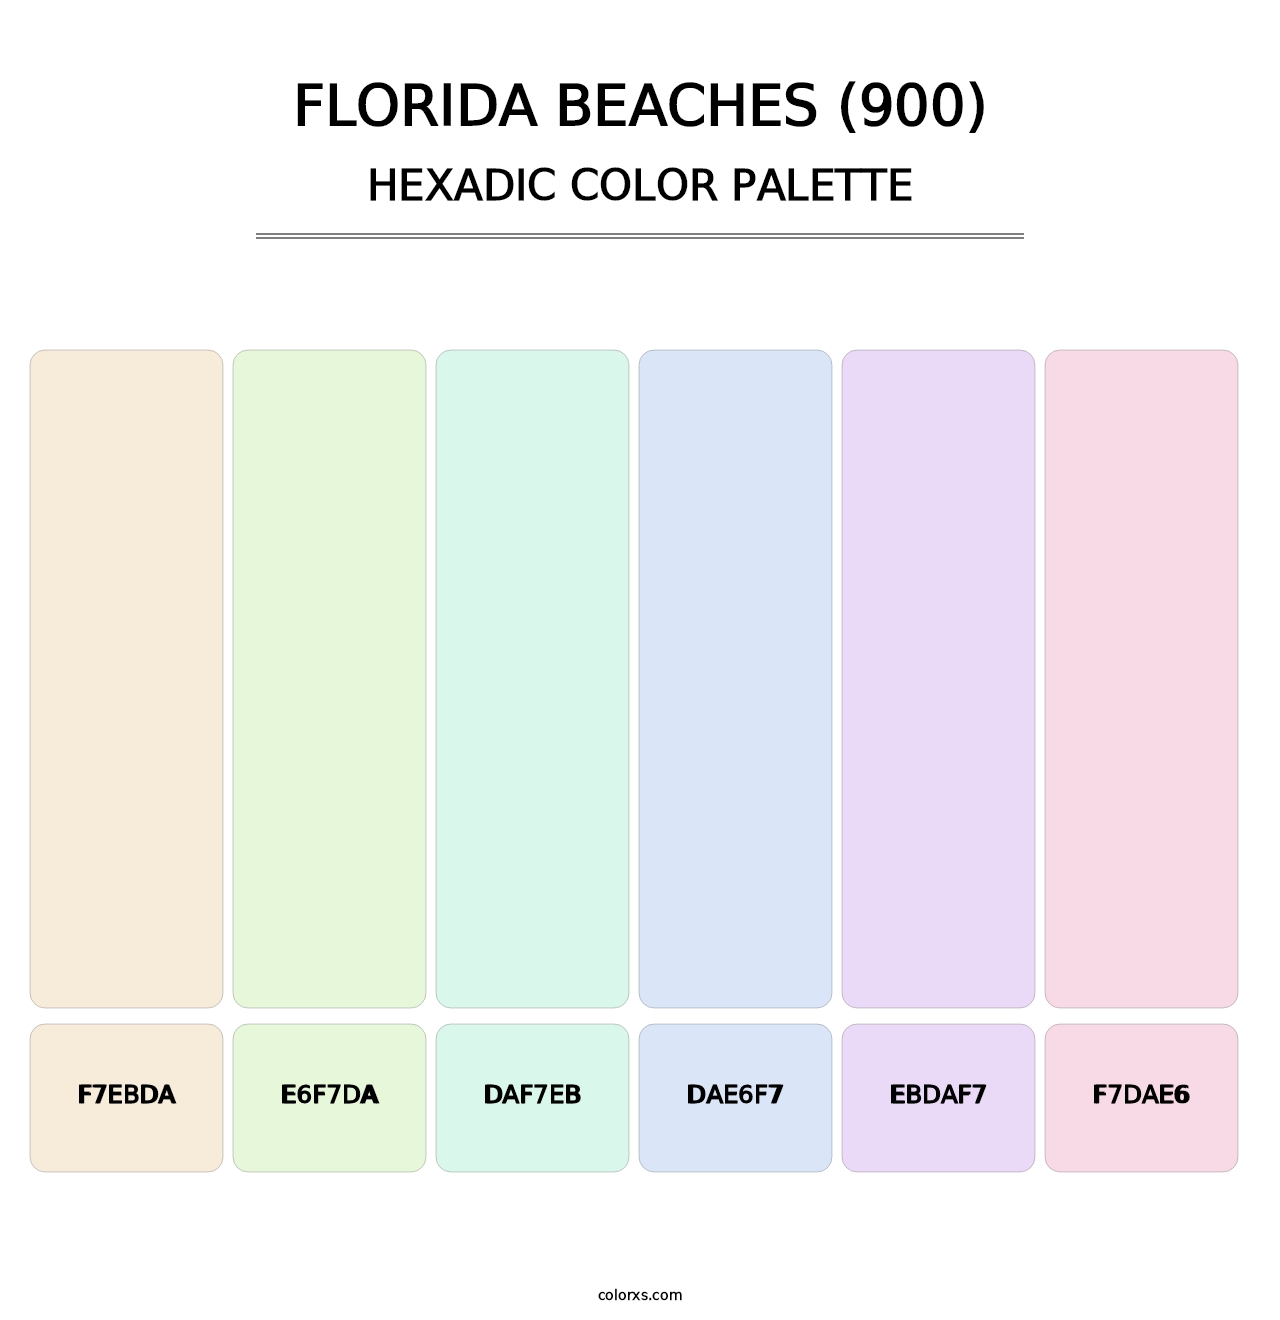 Florida Beaches (900) - Hexadic Color Palette